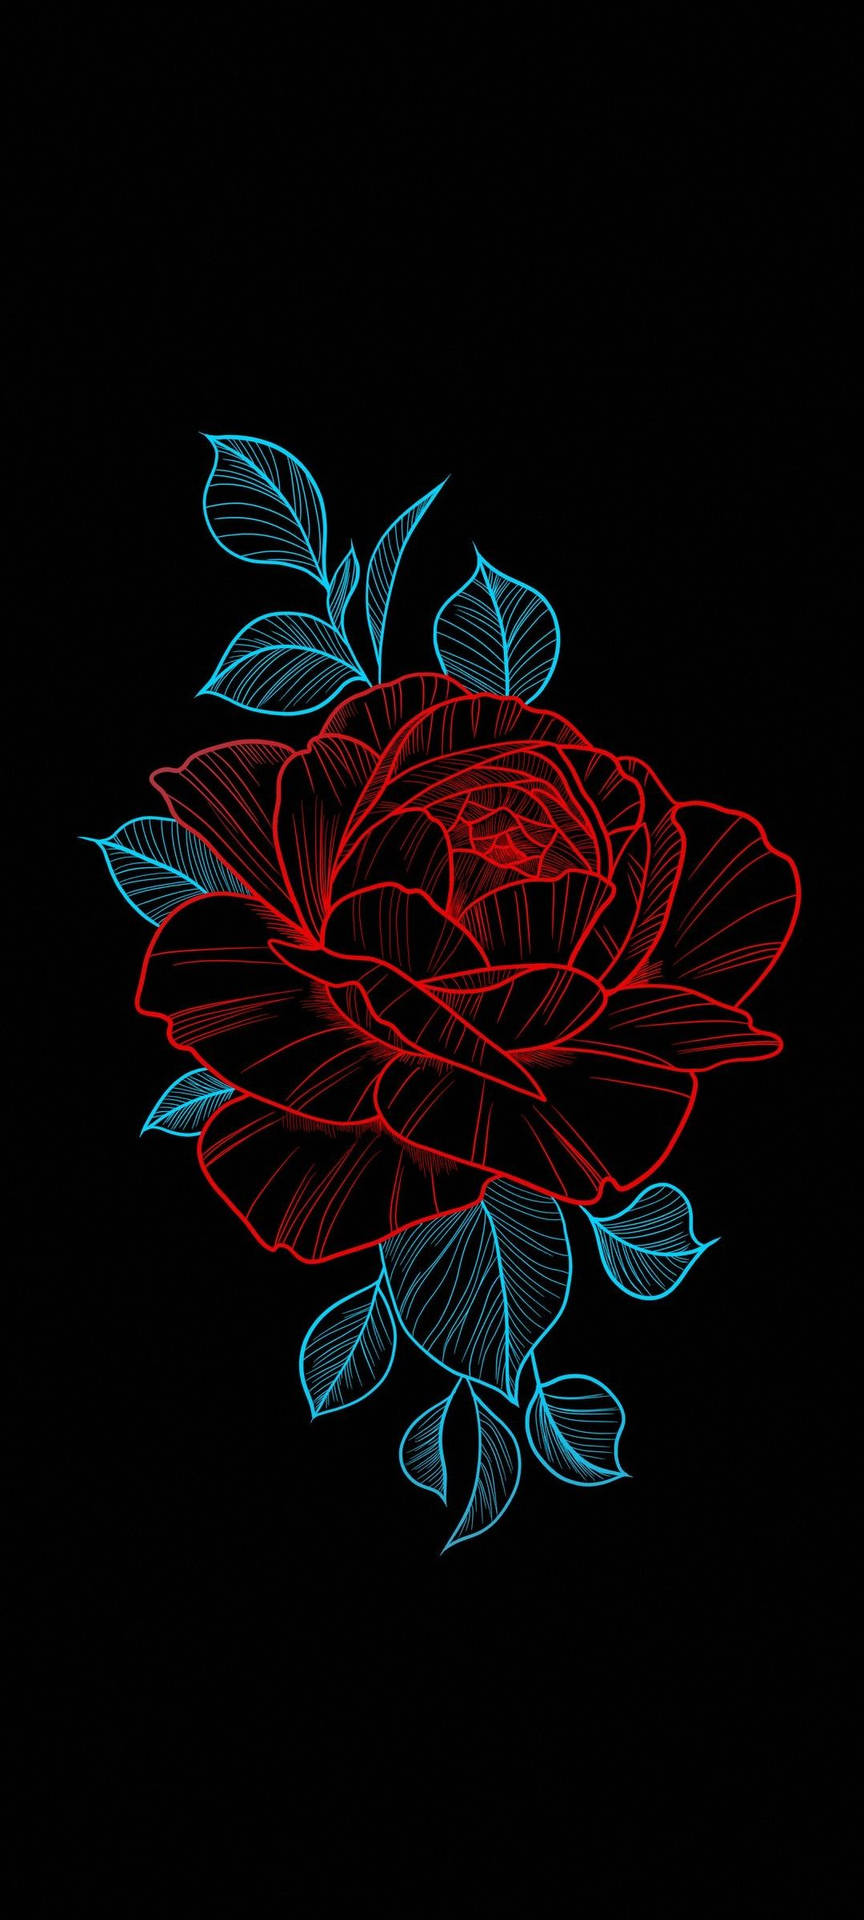 https://wallpapers.com/images/hd/flower-design-neon-rose-j54gvey7nc5t6jw6.jpg